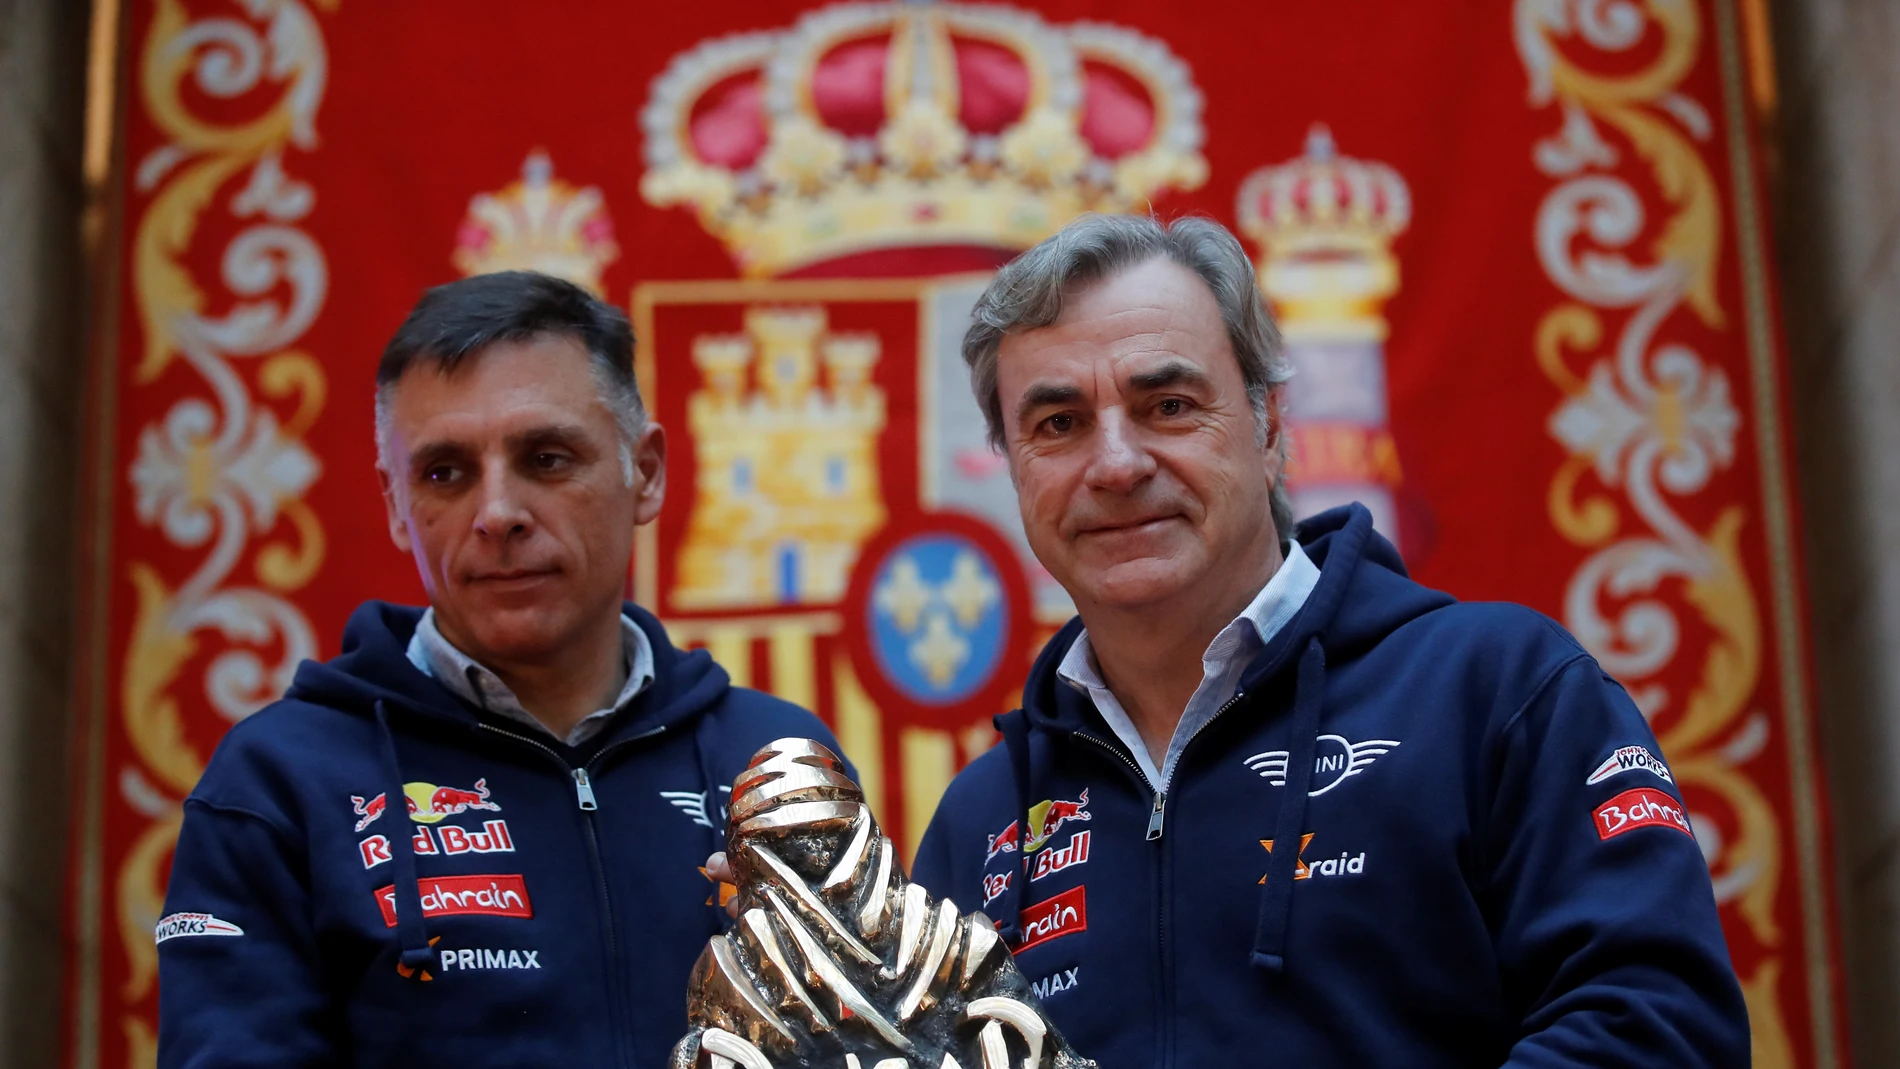 Carlos Sainz y Lucas Cruz tras ganar el Dakar 2020